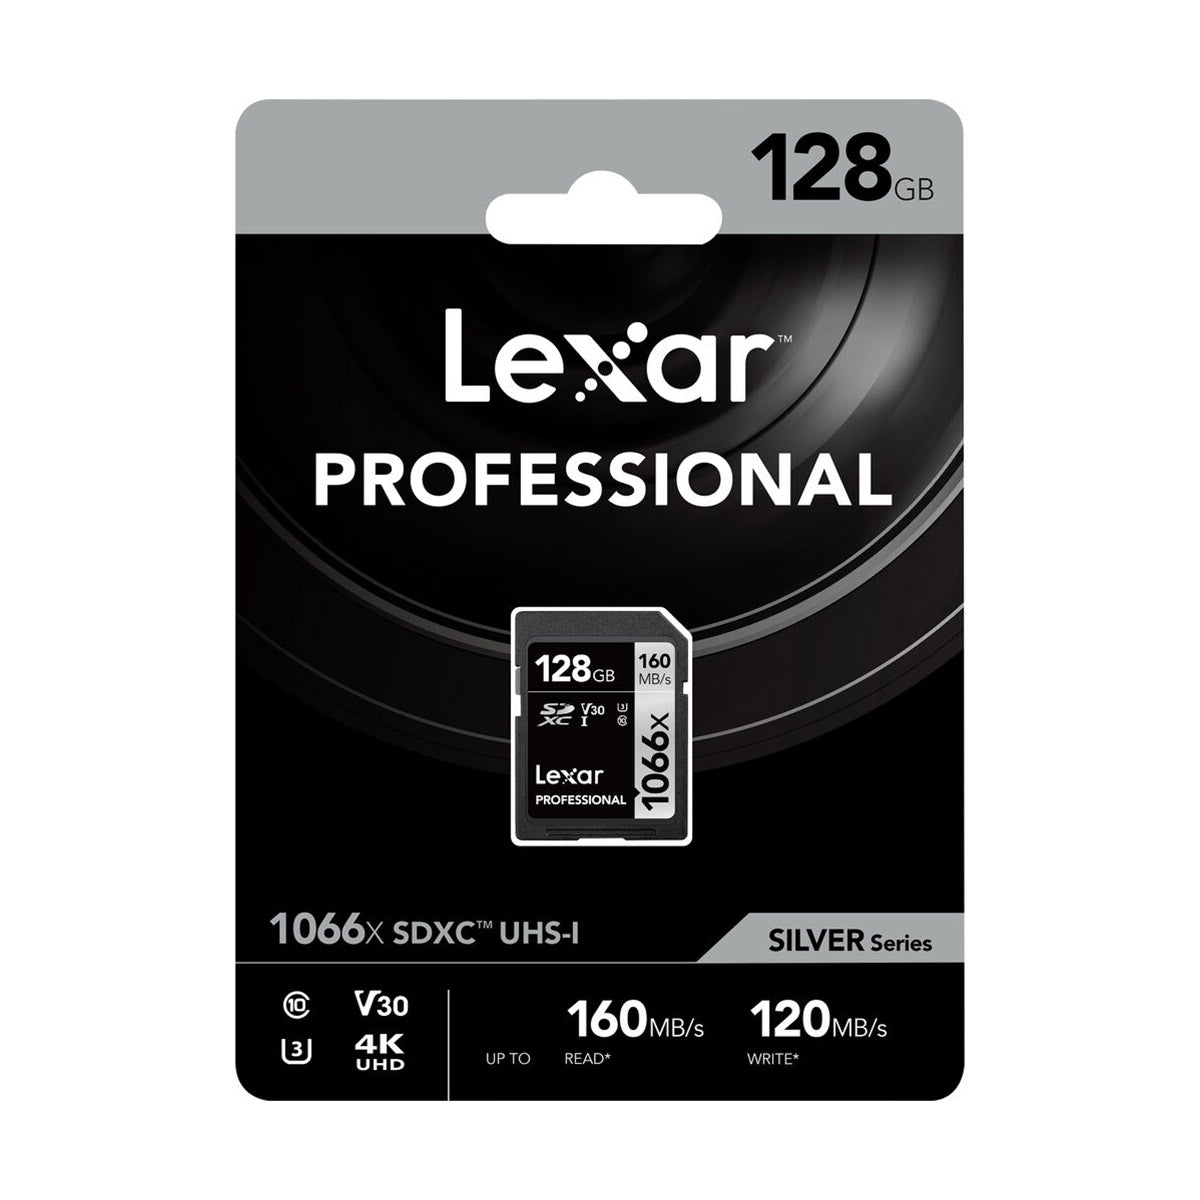 Lexar 128GB Professional 1066x UHS-I SDXC (V30) Memory Card